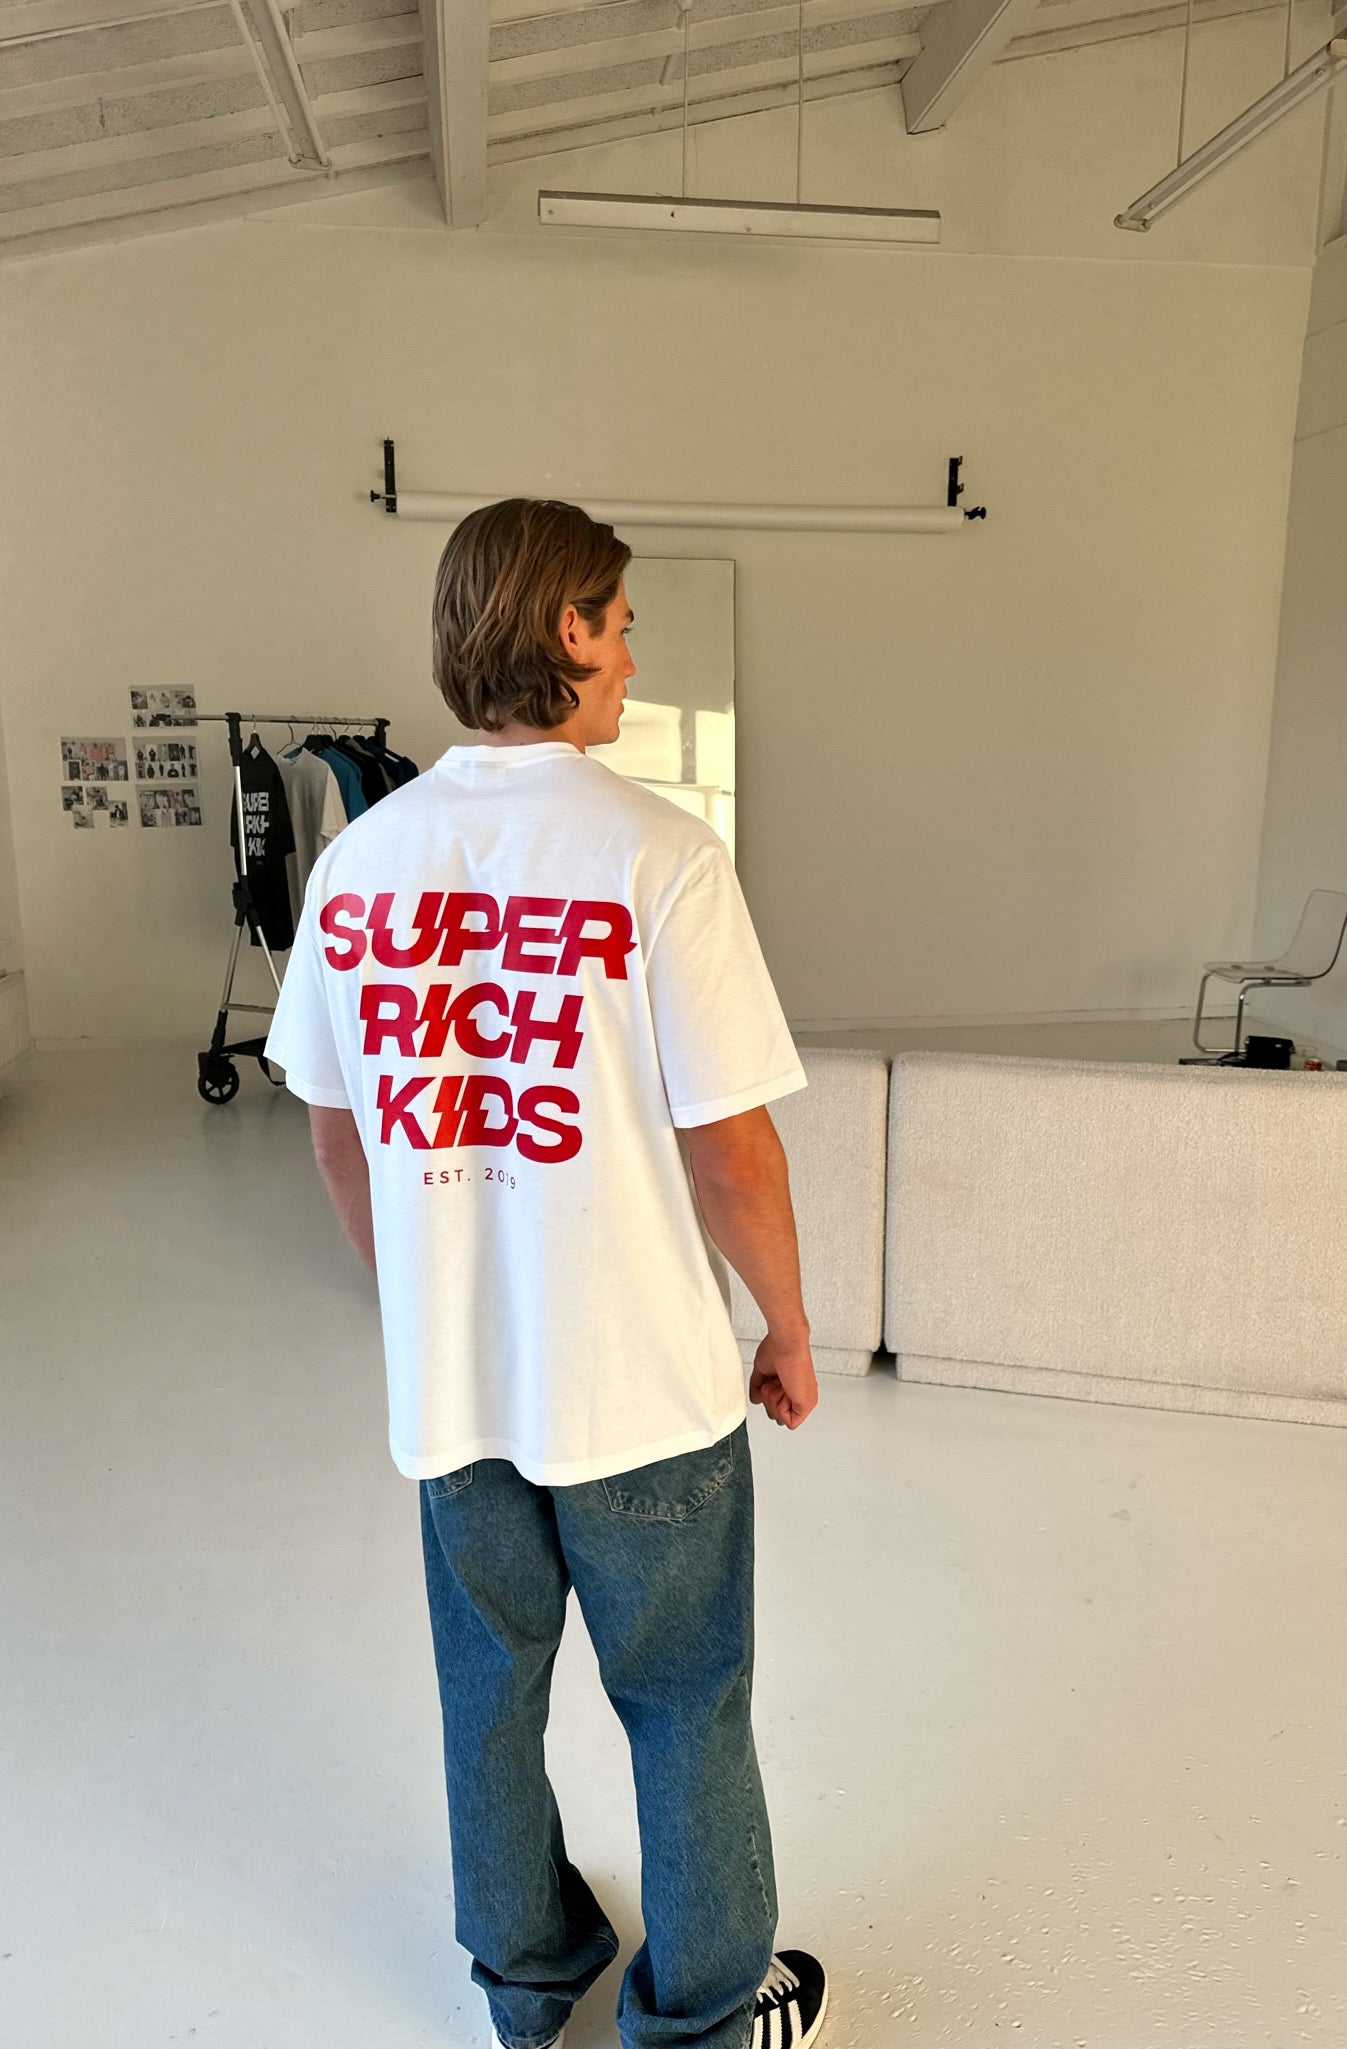 Super Rich Kids T-Shirt wit met rood